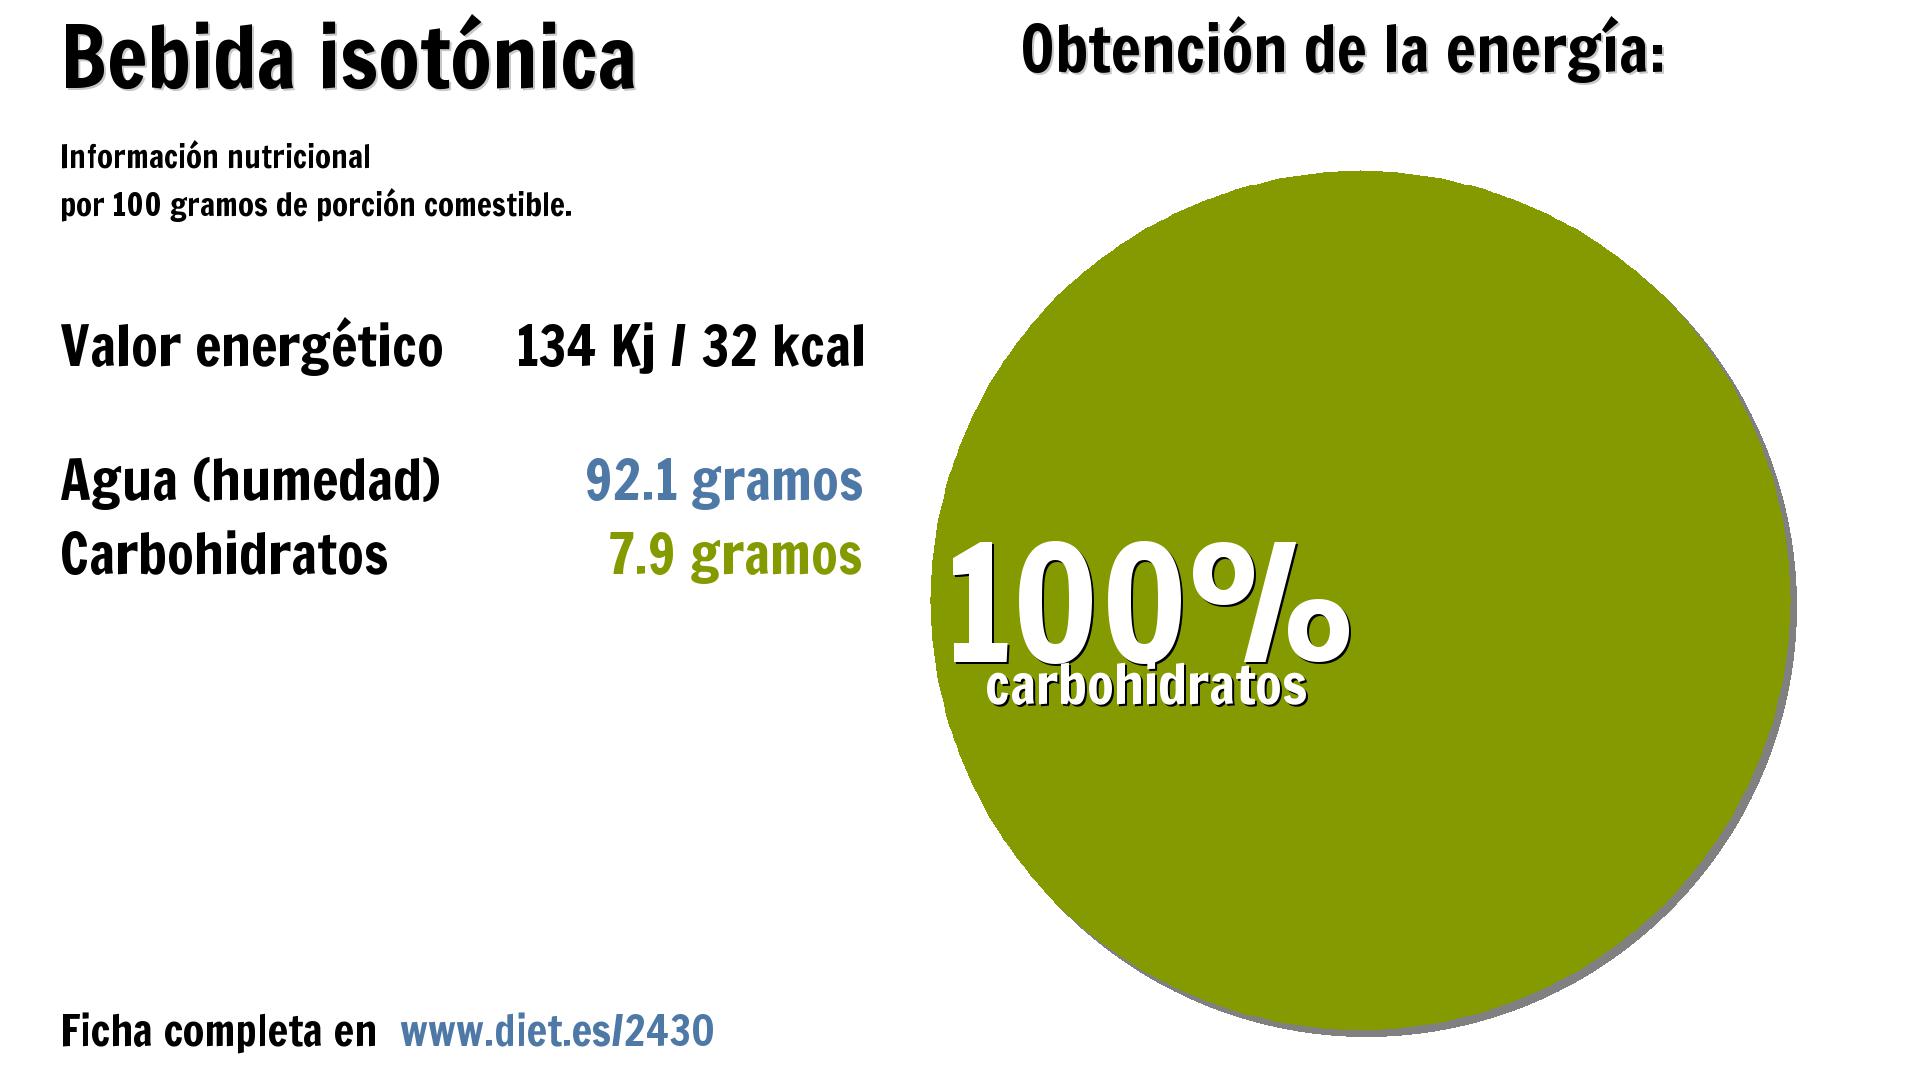 Bebida isotónica: energía 134 Kj, agua 92 g. y carbohidratos 8 g.